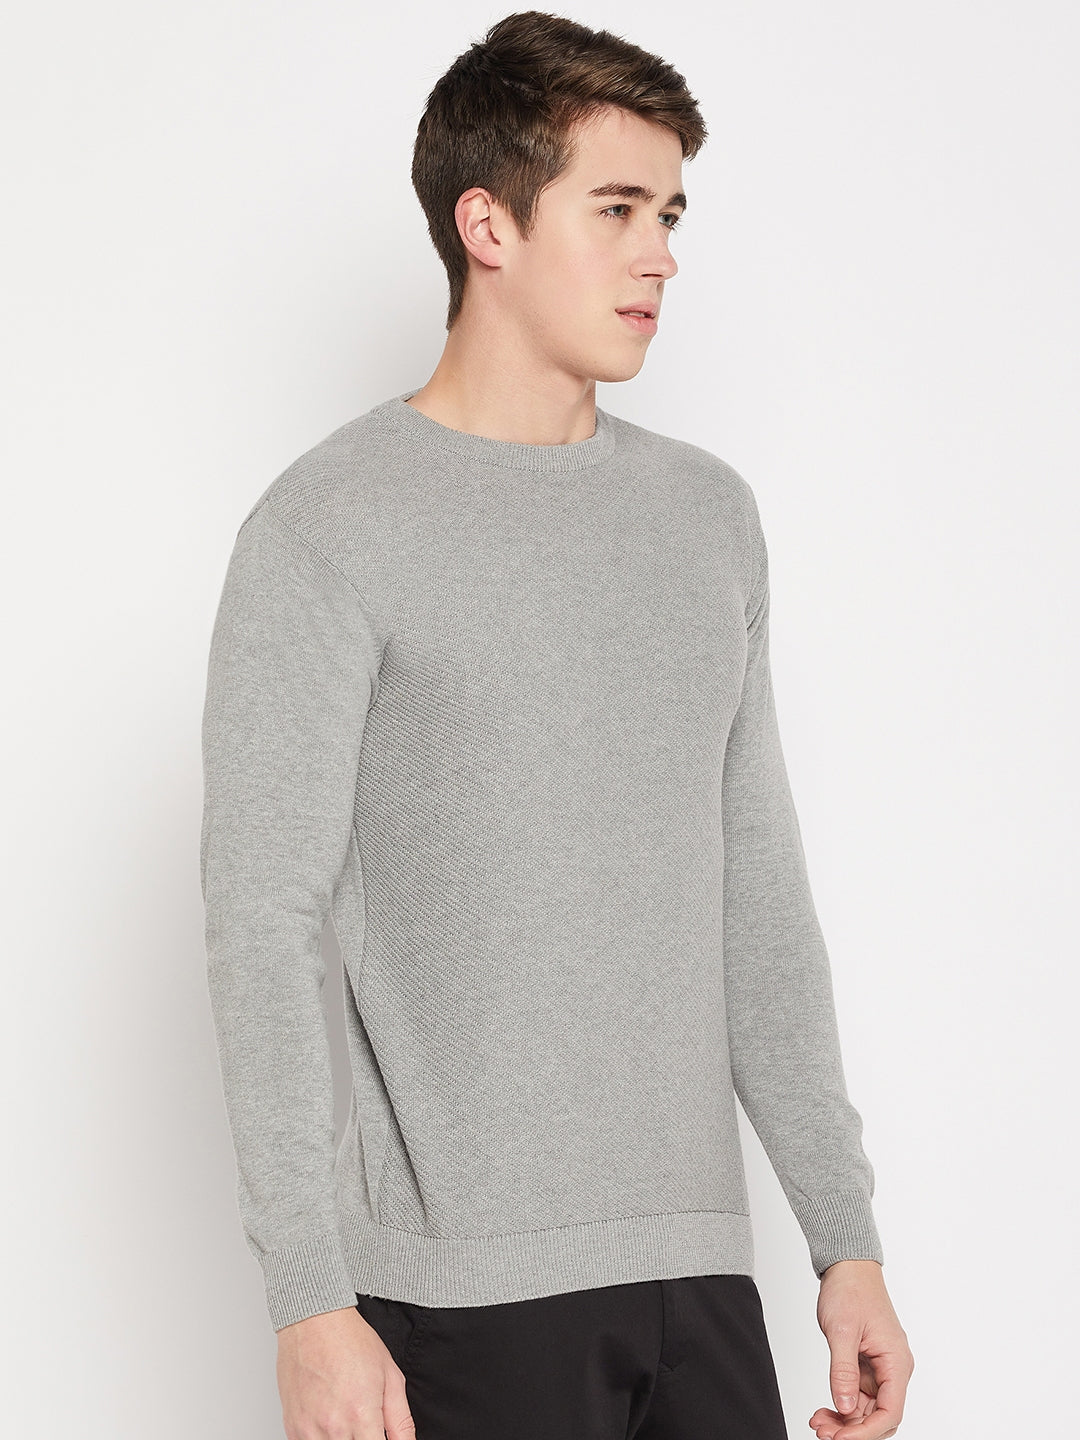 Camla Barcelona Grey Sweater For Men